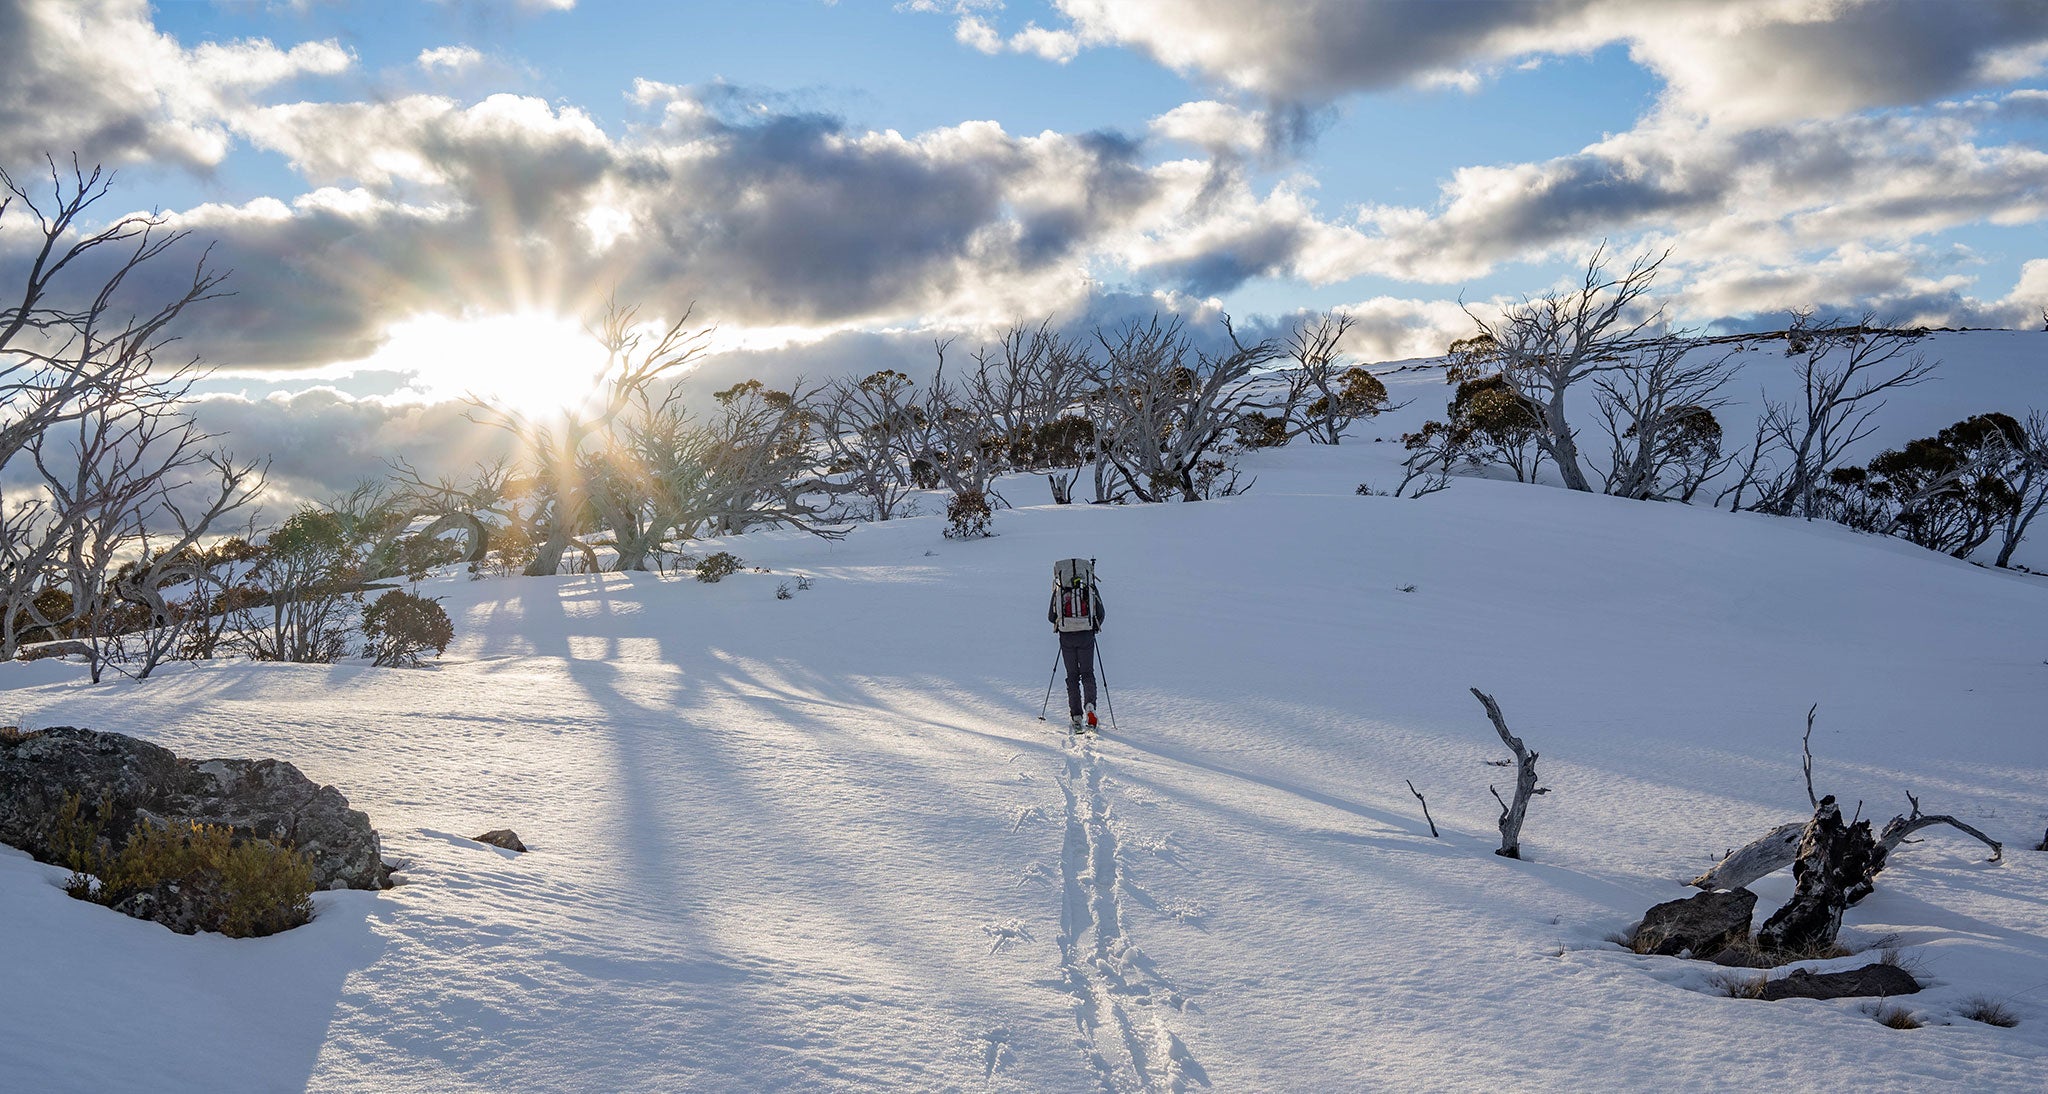 Ultralight backpacker hiking up snowy mountain